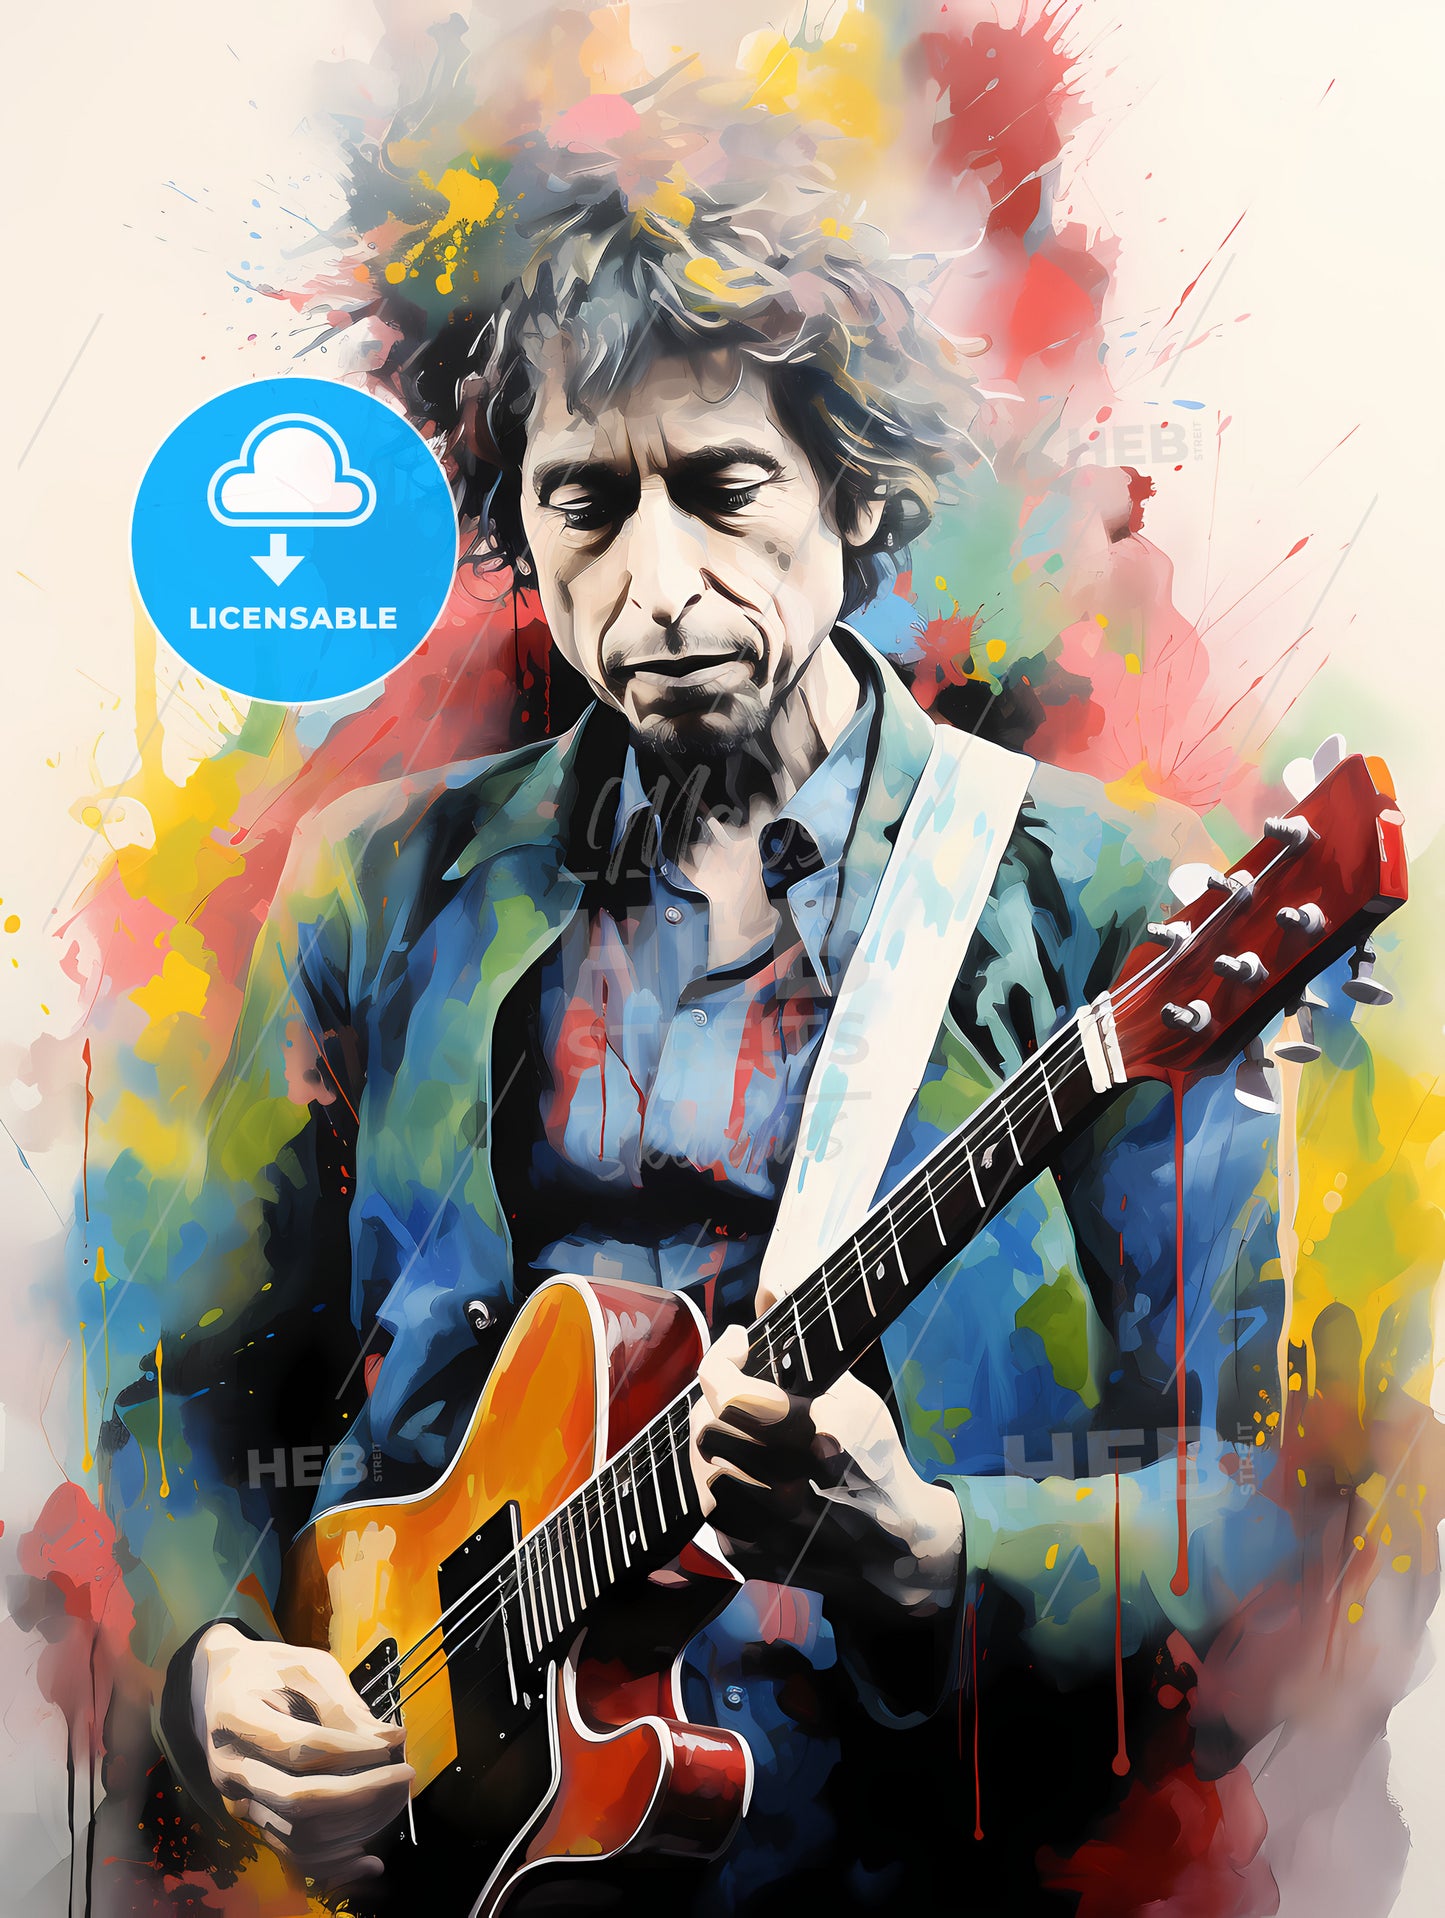 Bob Dylan - A Man Playing A Guitar